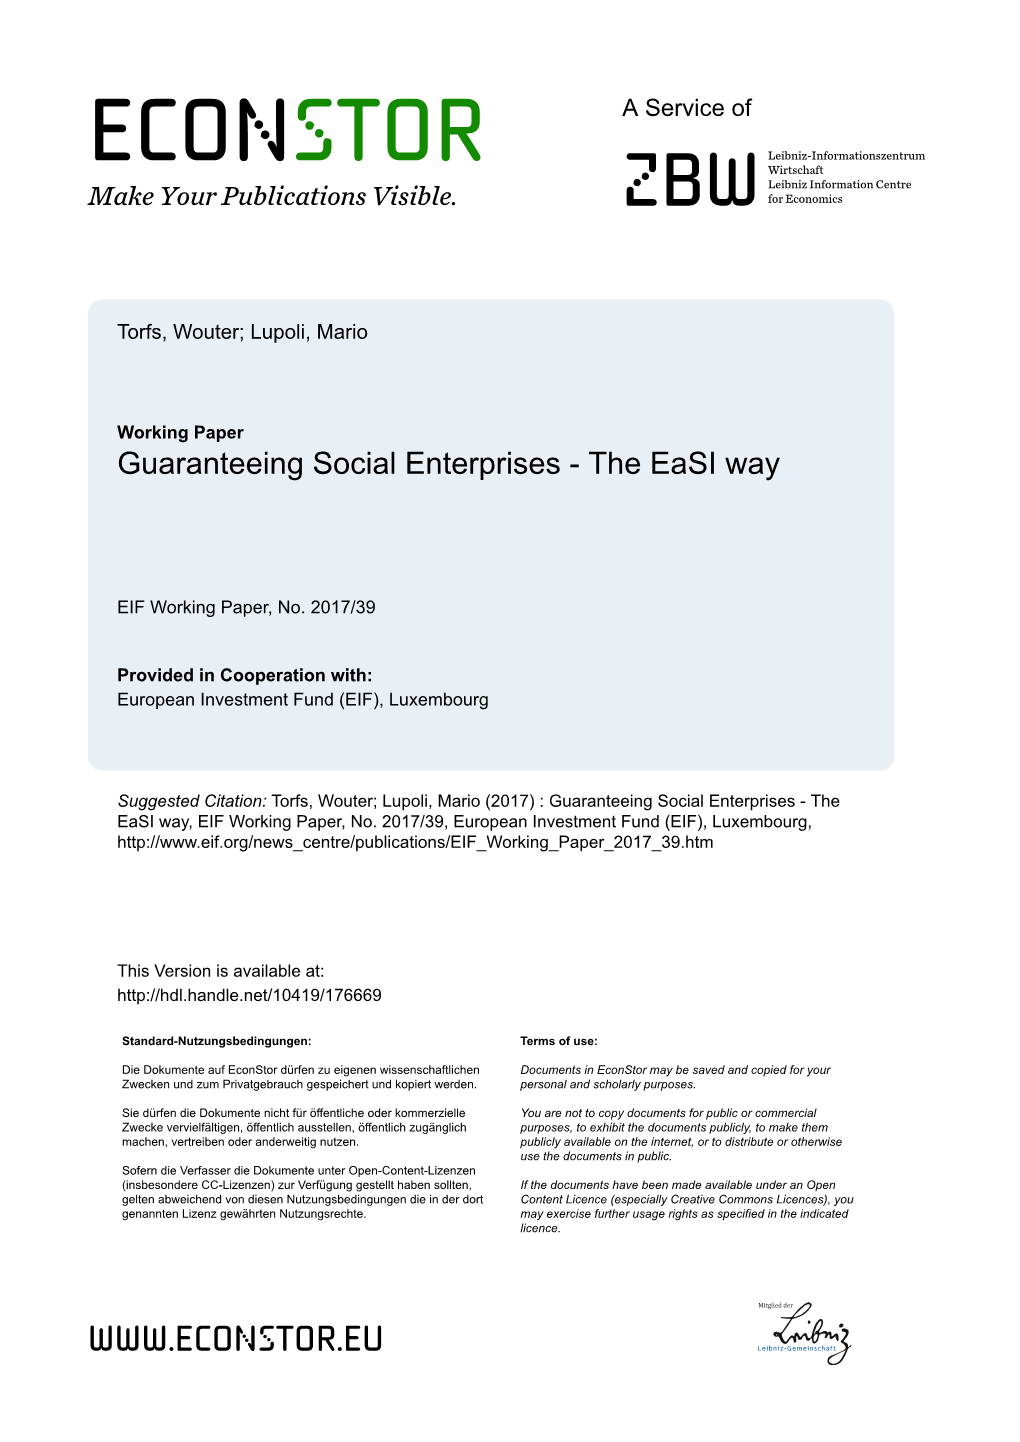 Guaranteeing Social Enterprises - the Easi Way